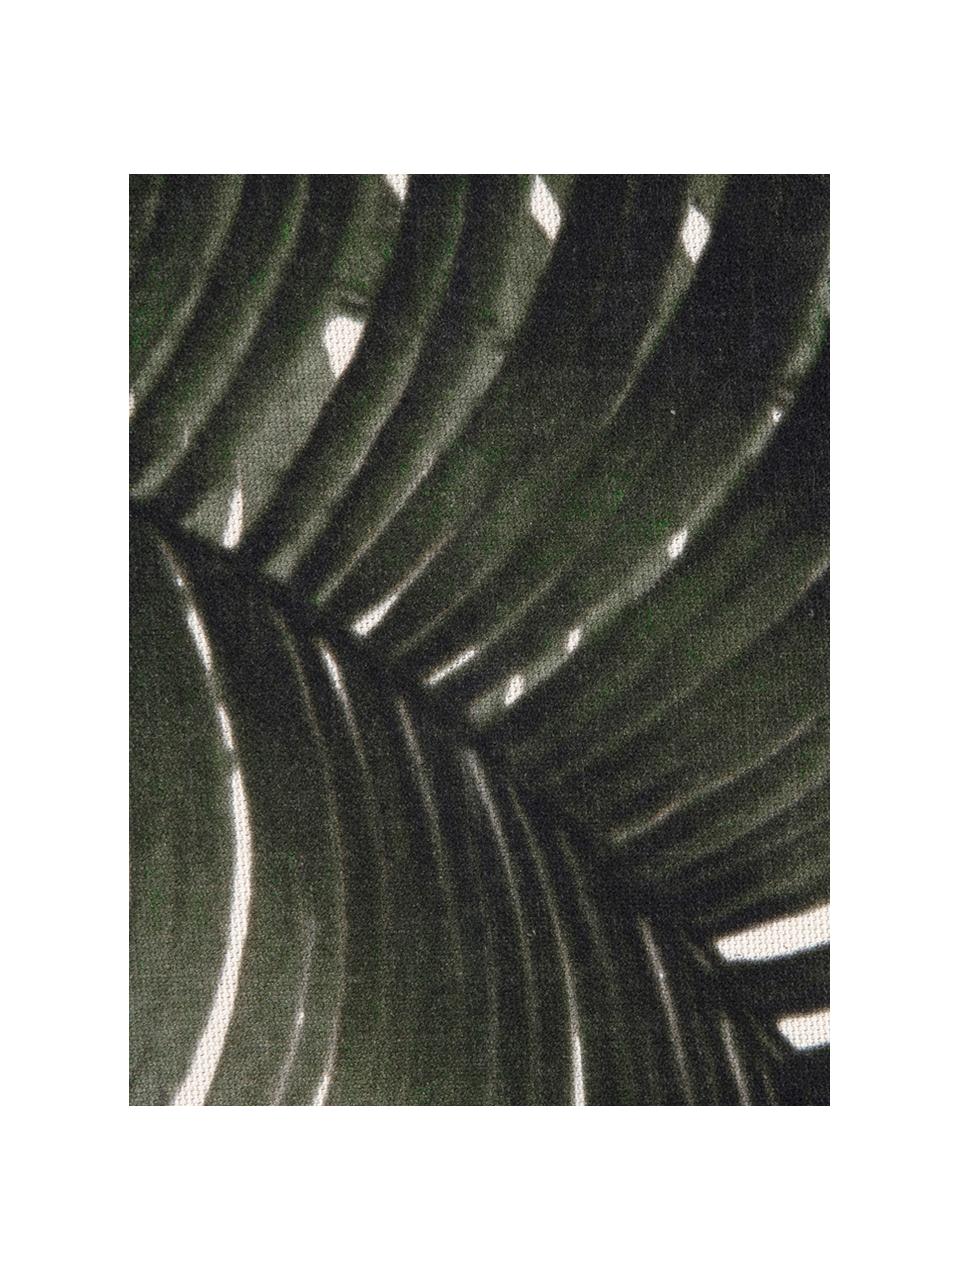 Kissenhülle Palmeira mit Palmenprint, 100% Baumwolle, Dunkelgrün, Beige, B 40 x L 40 cm